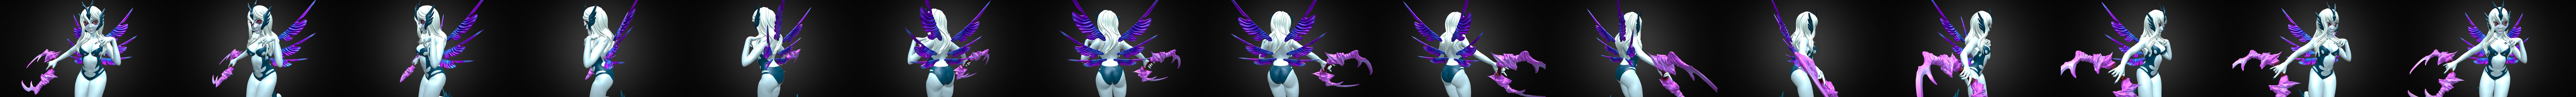 Vengeful Spirit Dota 2 Fanart - 3D model by Eddy Shin [f88dc9c